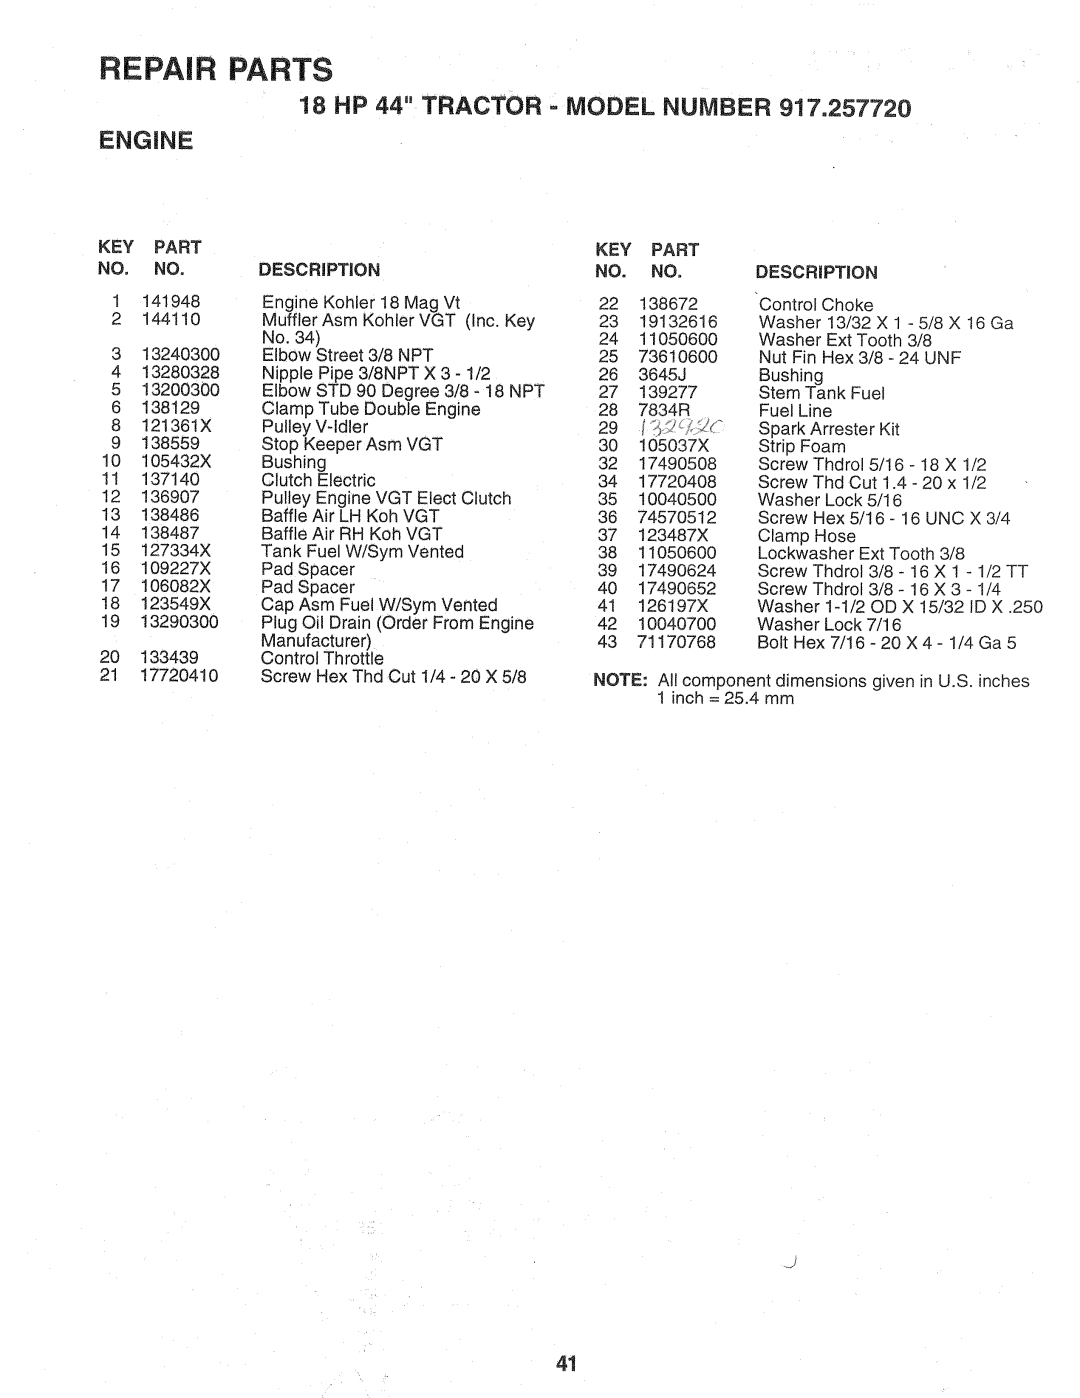 Sears 917.257720 owner manual 18 HP 44 TRACTOR = MODEL NUMBER ENGINE, Repair Parts, Key Part No. No, DESCRiPTiON 